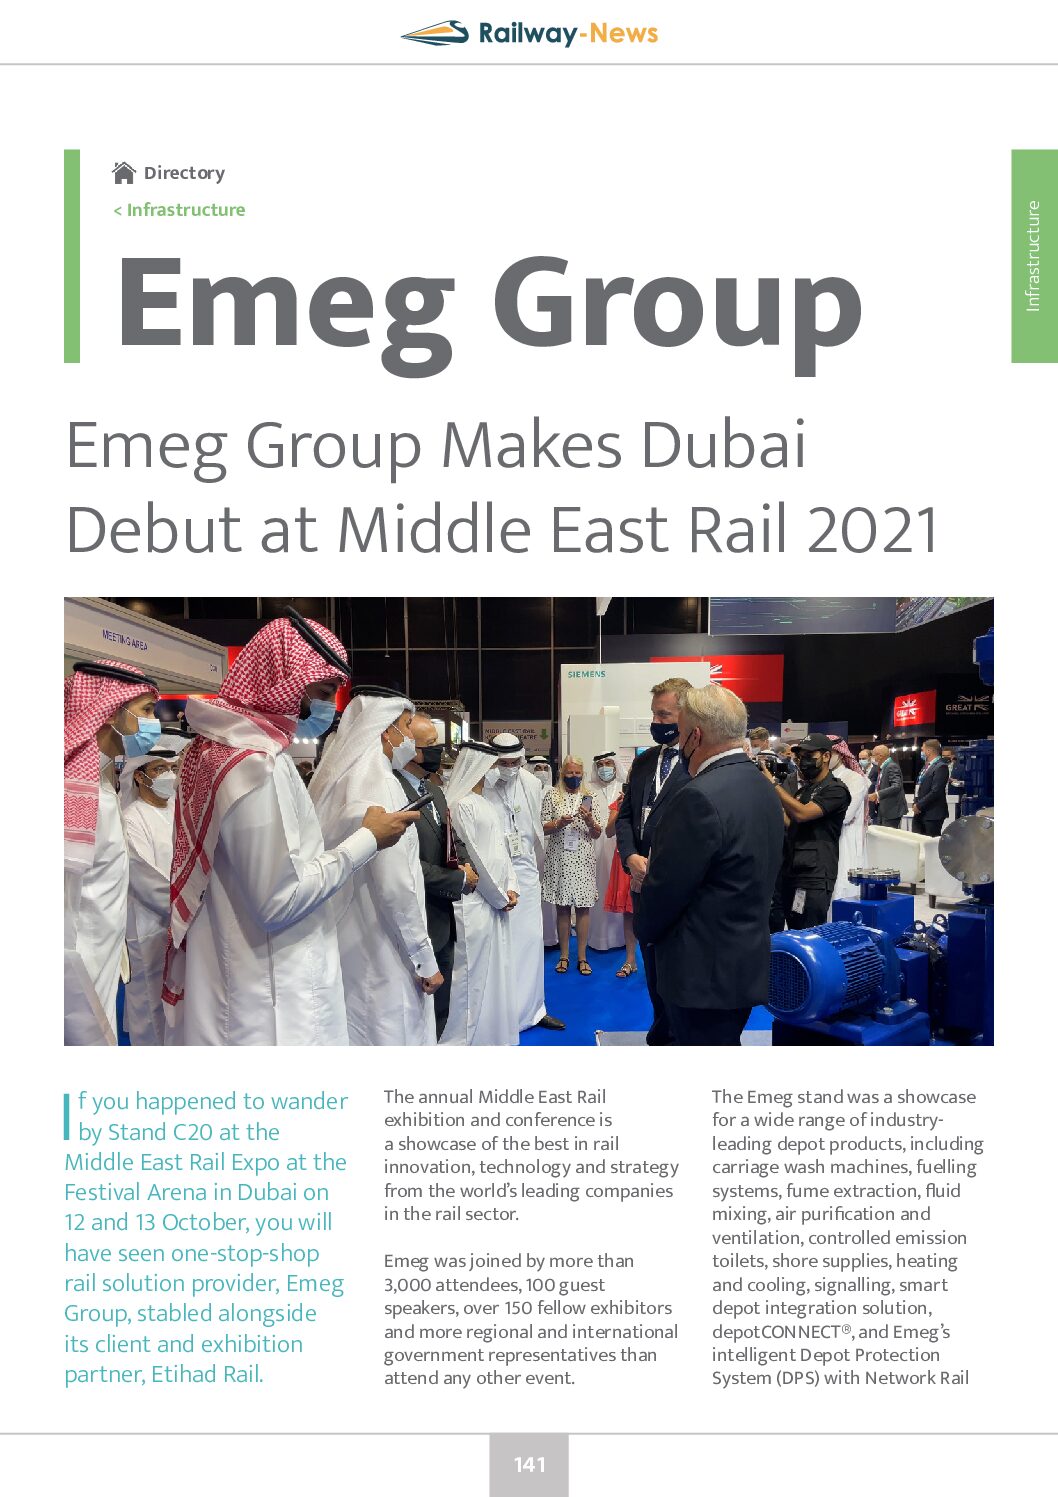 Emeg Group Makes Dubai Debut at Middle East Rail 2021